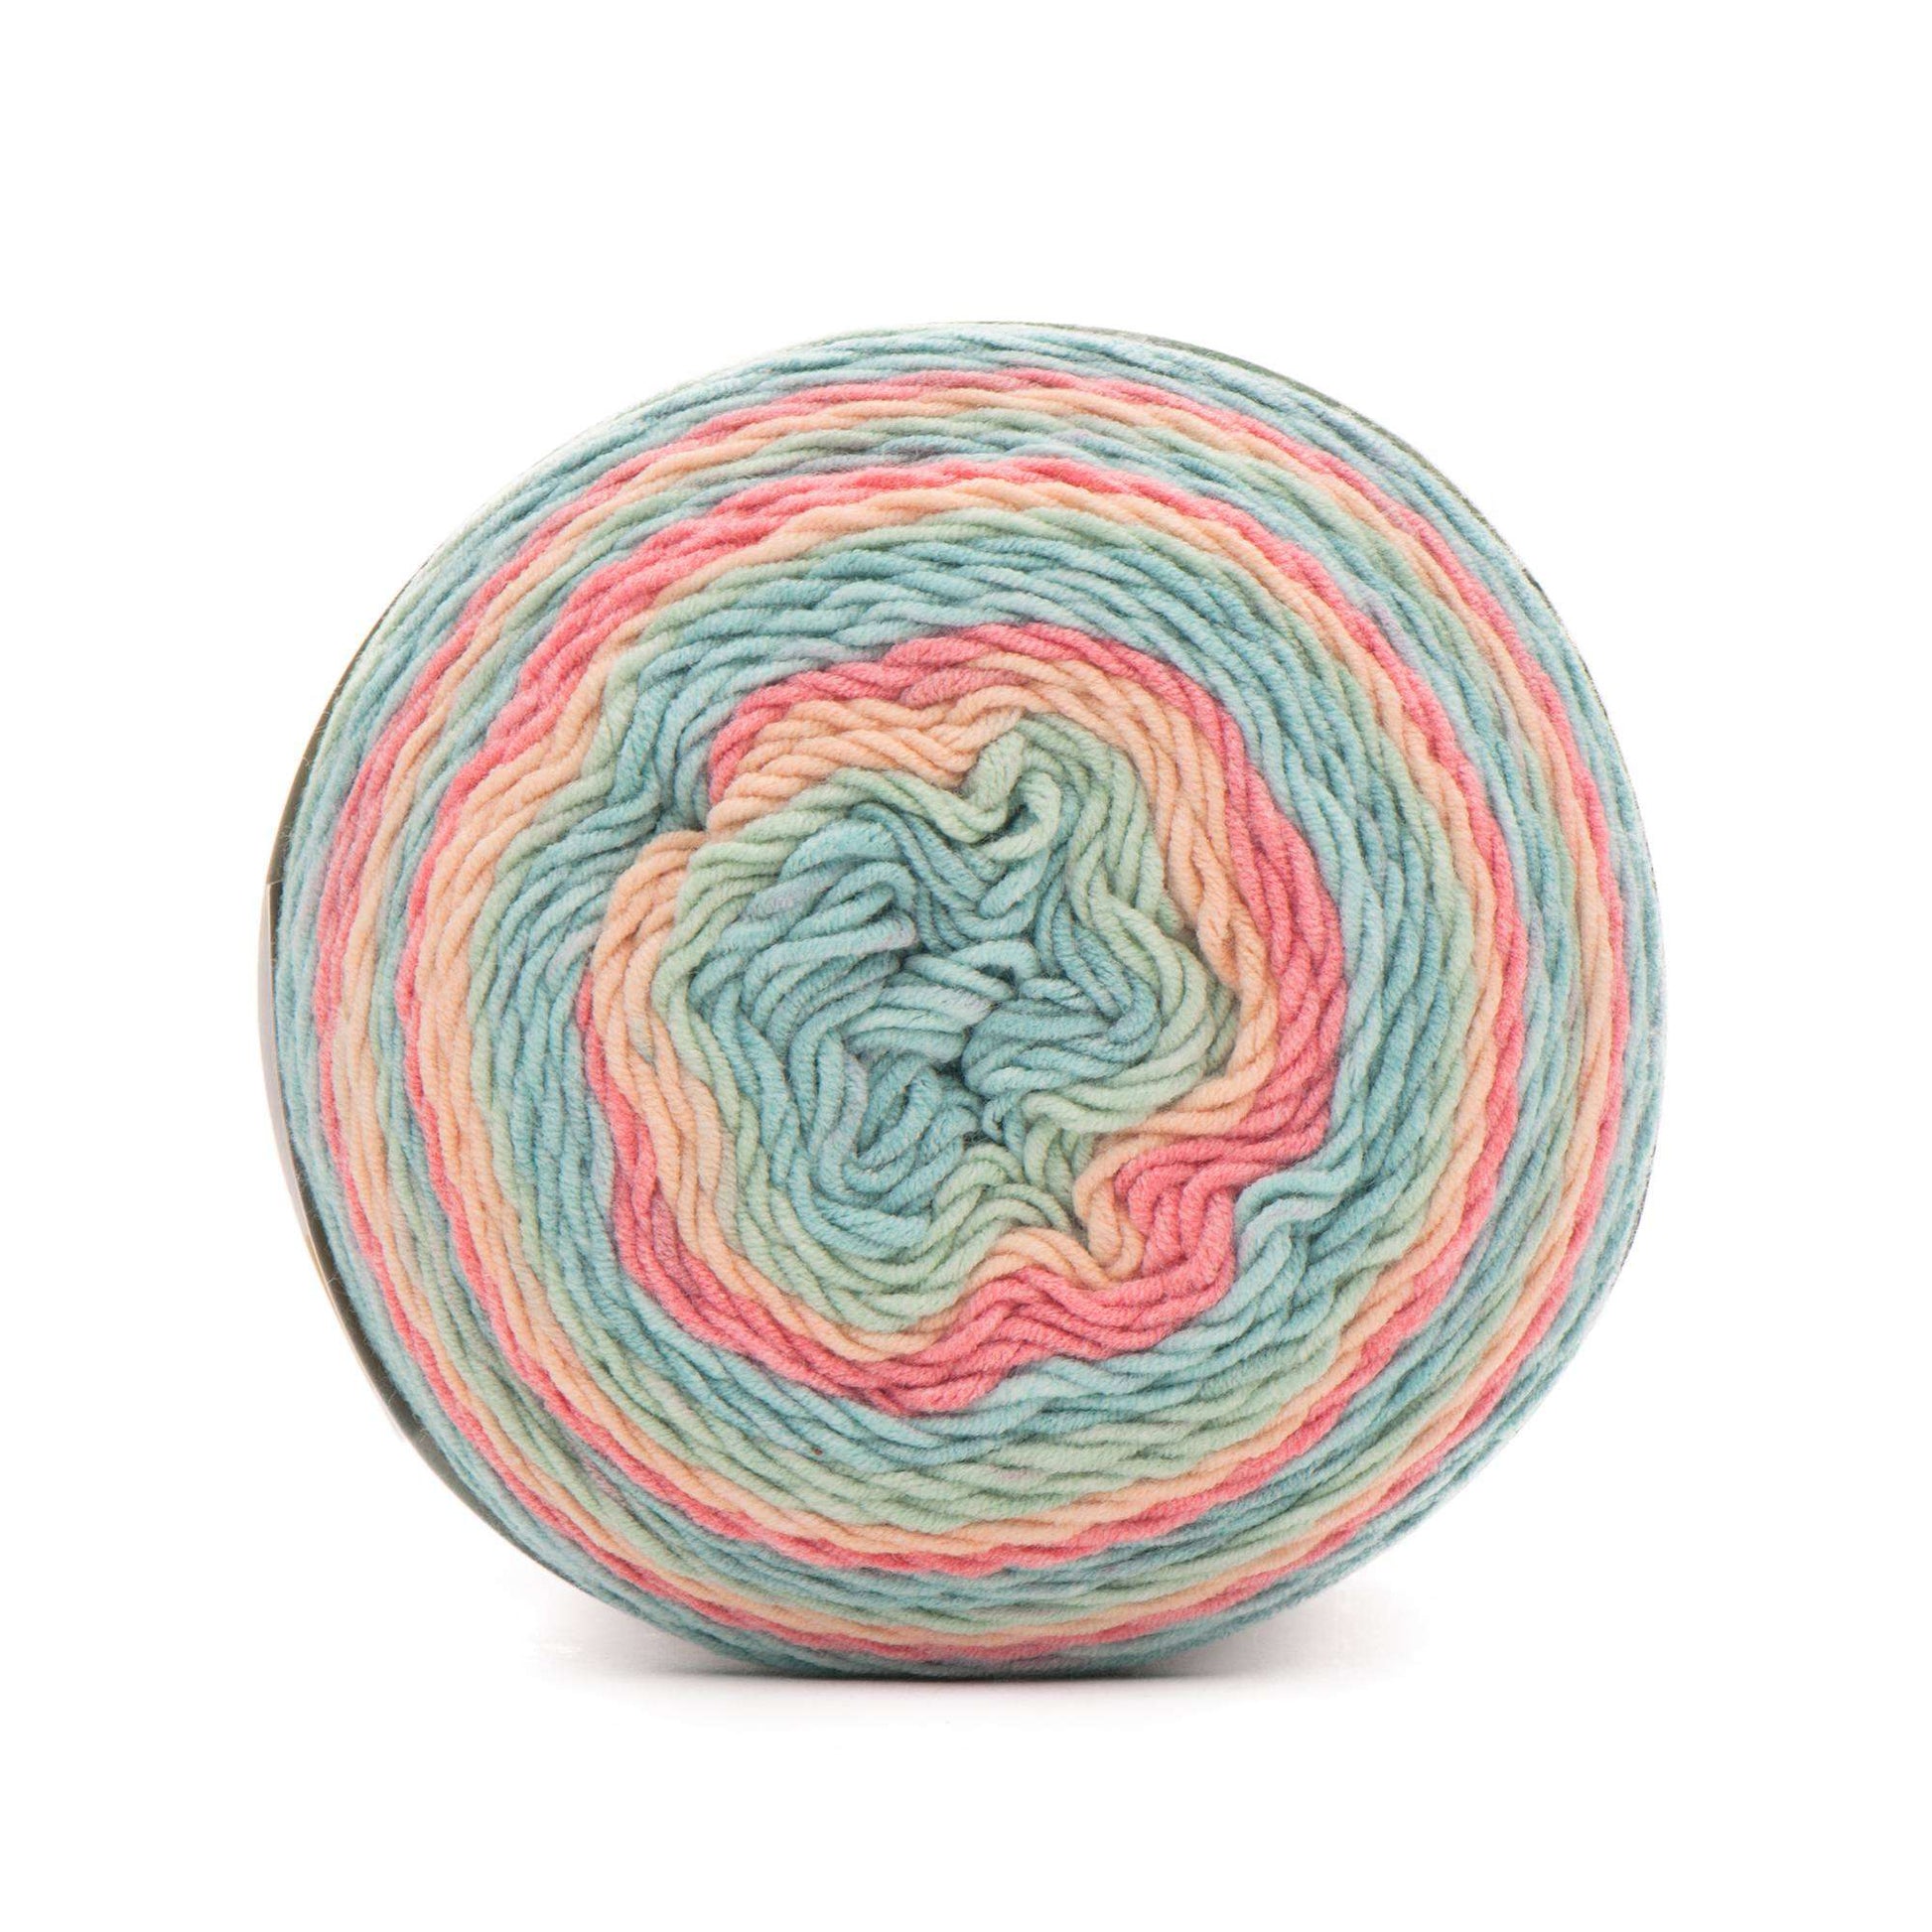 Caron Cotton Cakes Yarn (250g/8.8oz) - Clearance shades